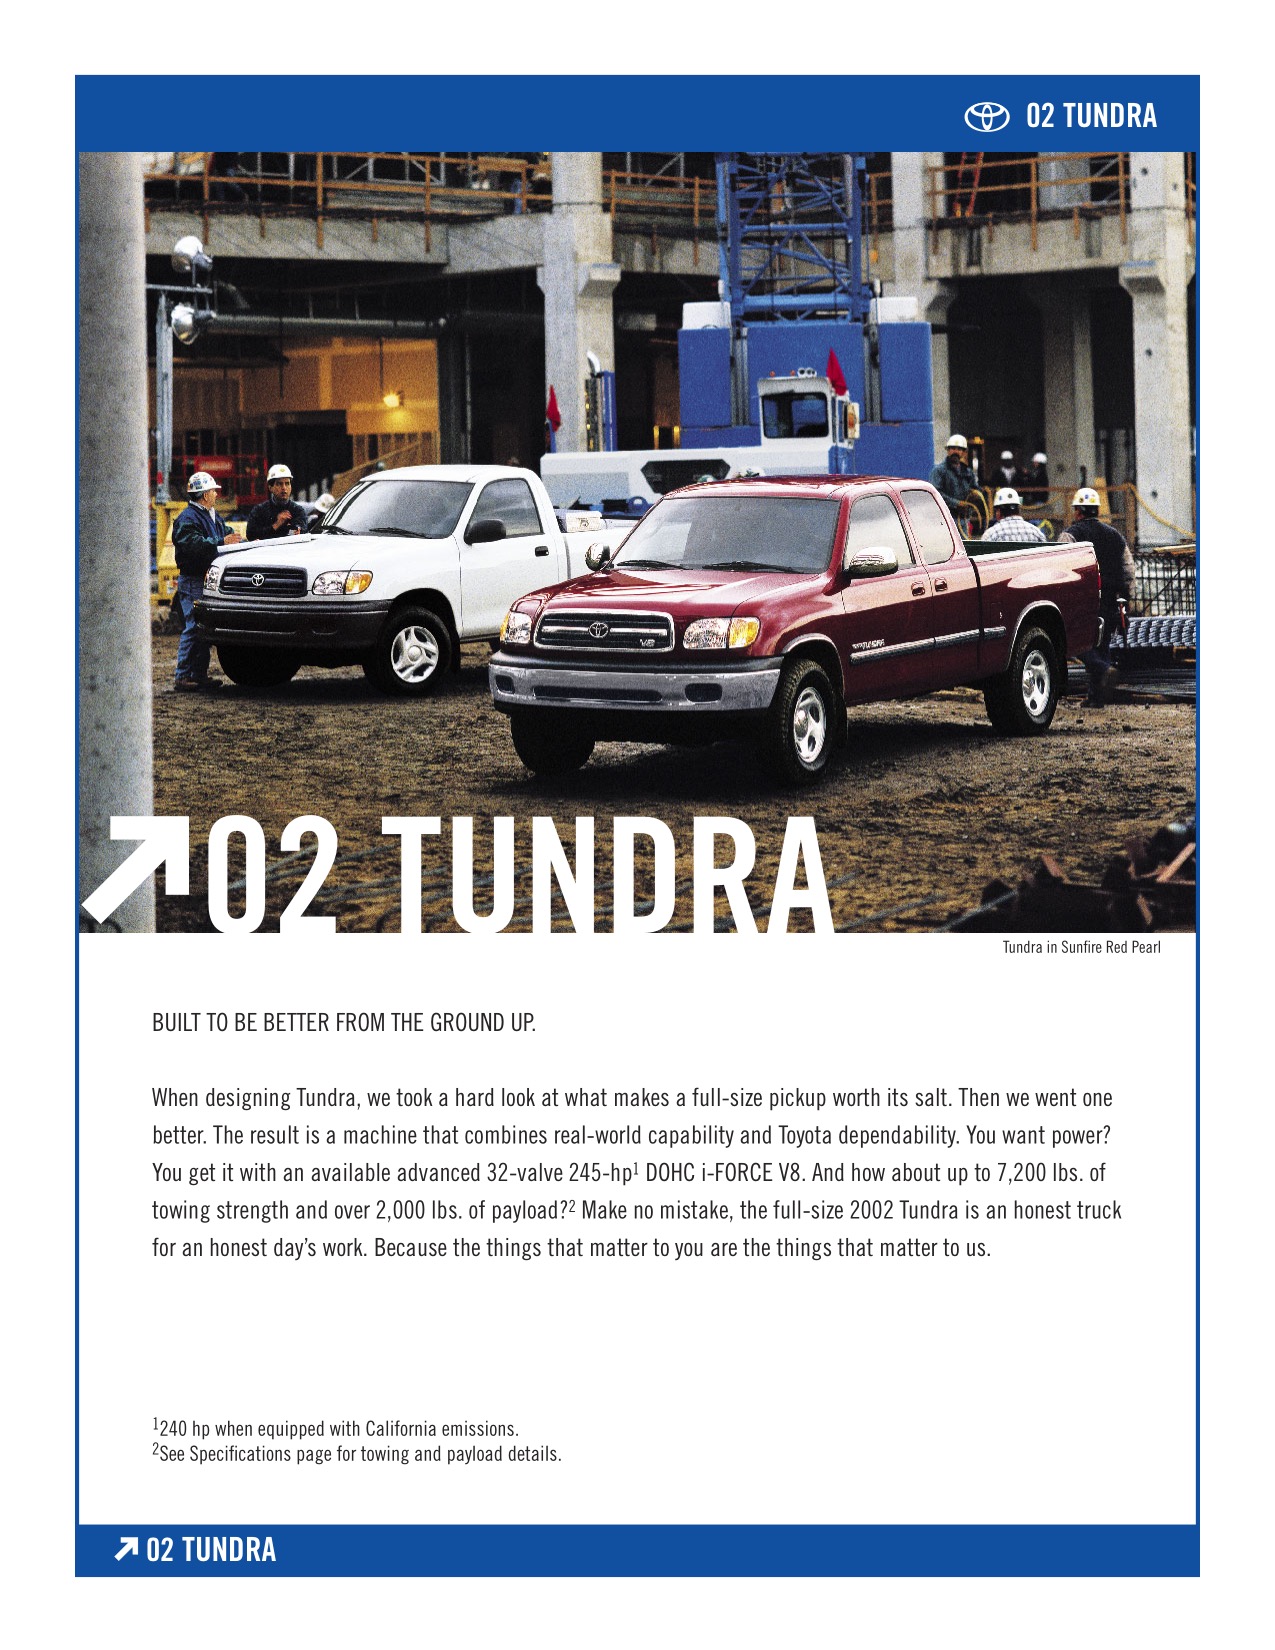 2002 Toyota Tundra Brochure